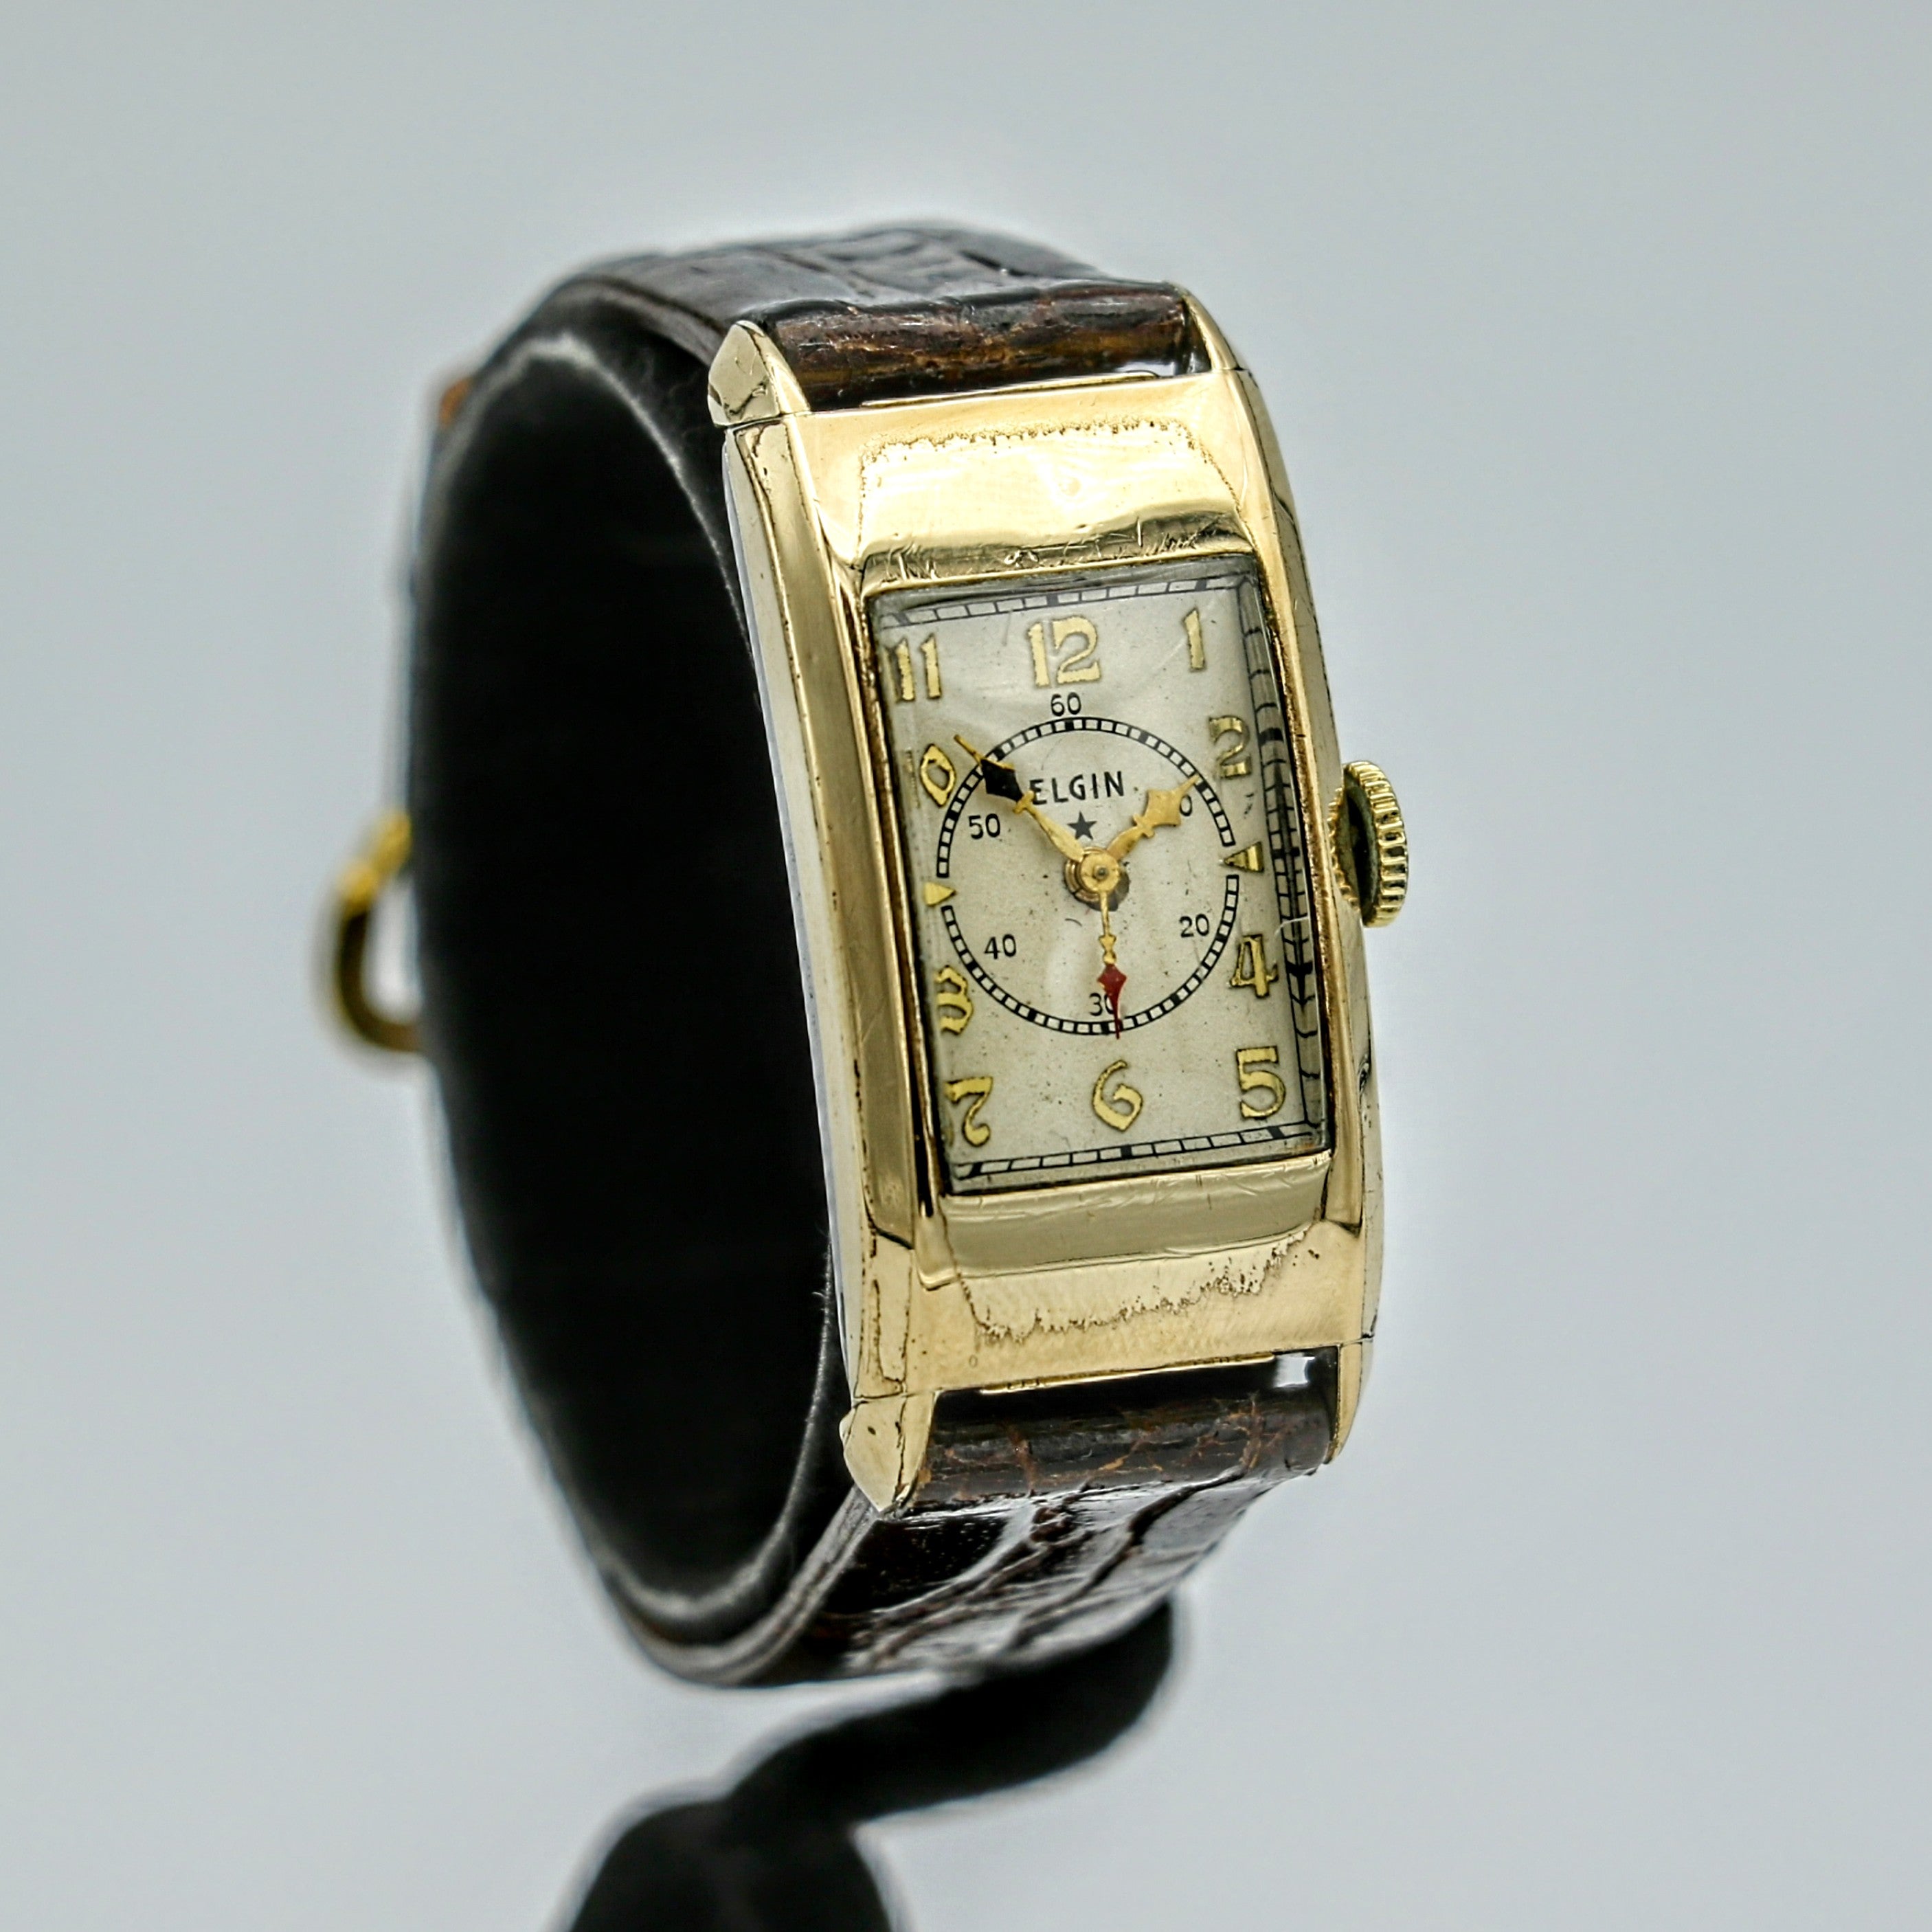 1934 ELGIN Doctor William Osler Watch 15 Jewels U.S.A. Made Wristwatch